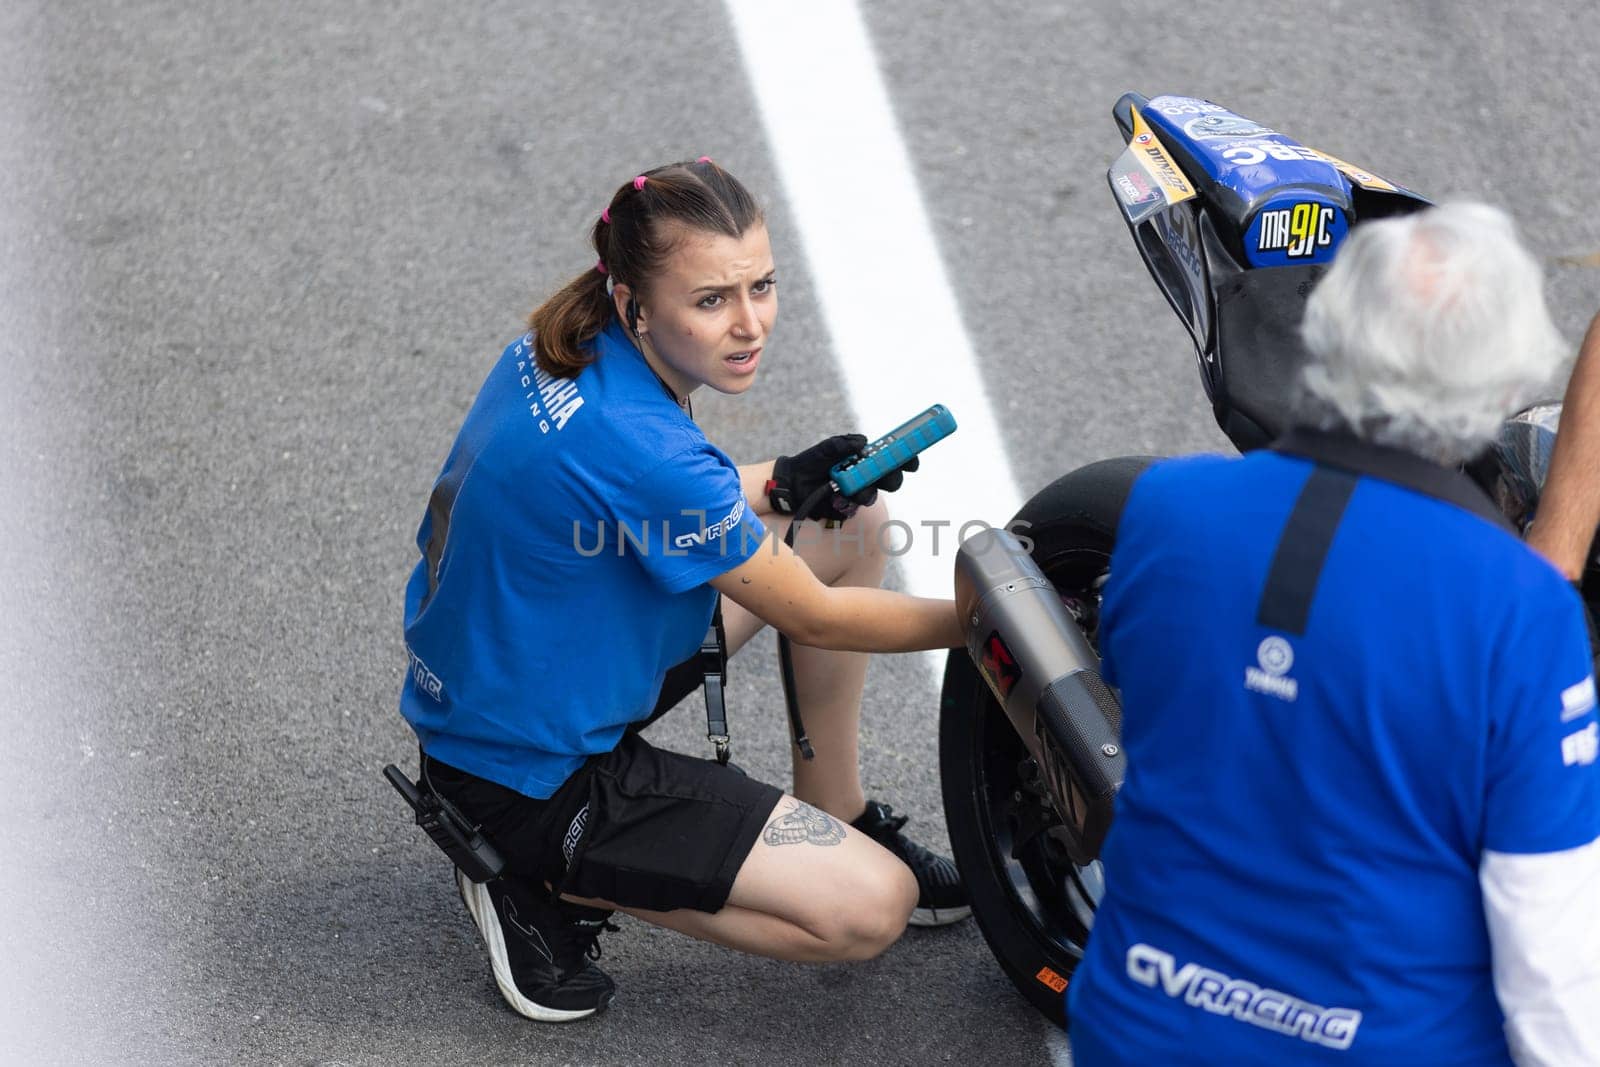 6 may 2023, Estoril, Portugal - MotoGP racing - woman repaer helps with Motorcycle by Studia72